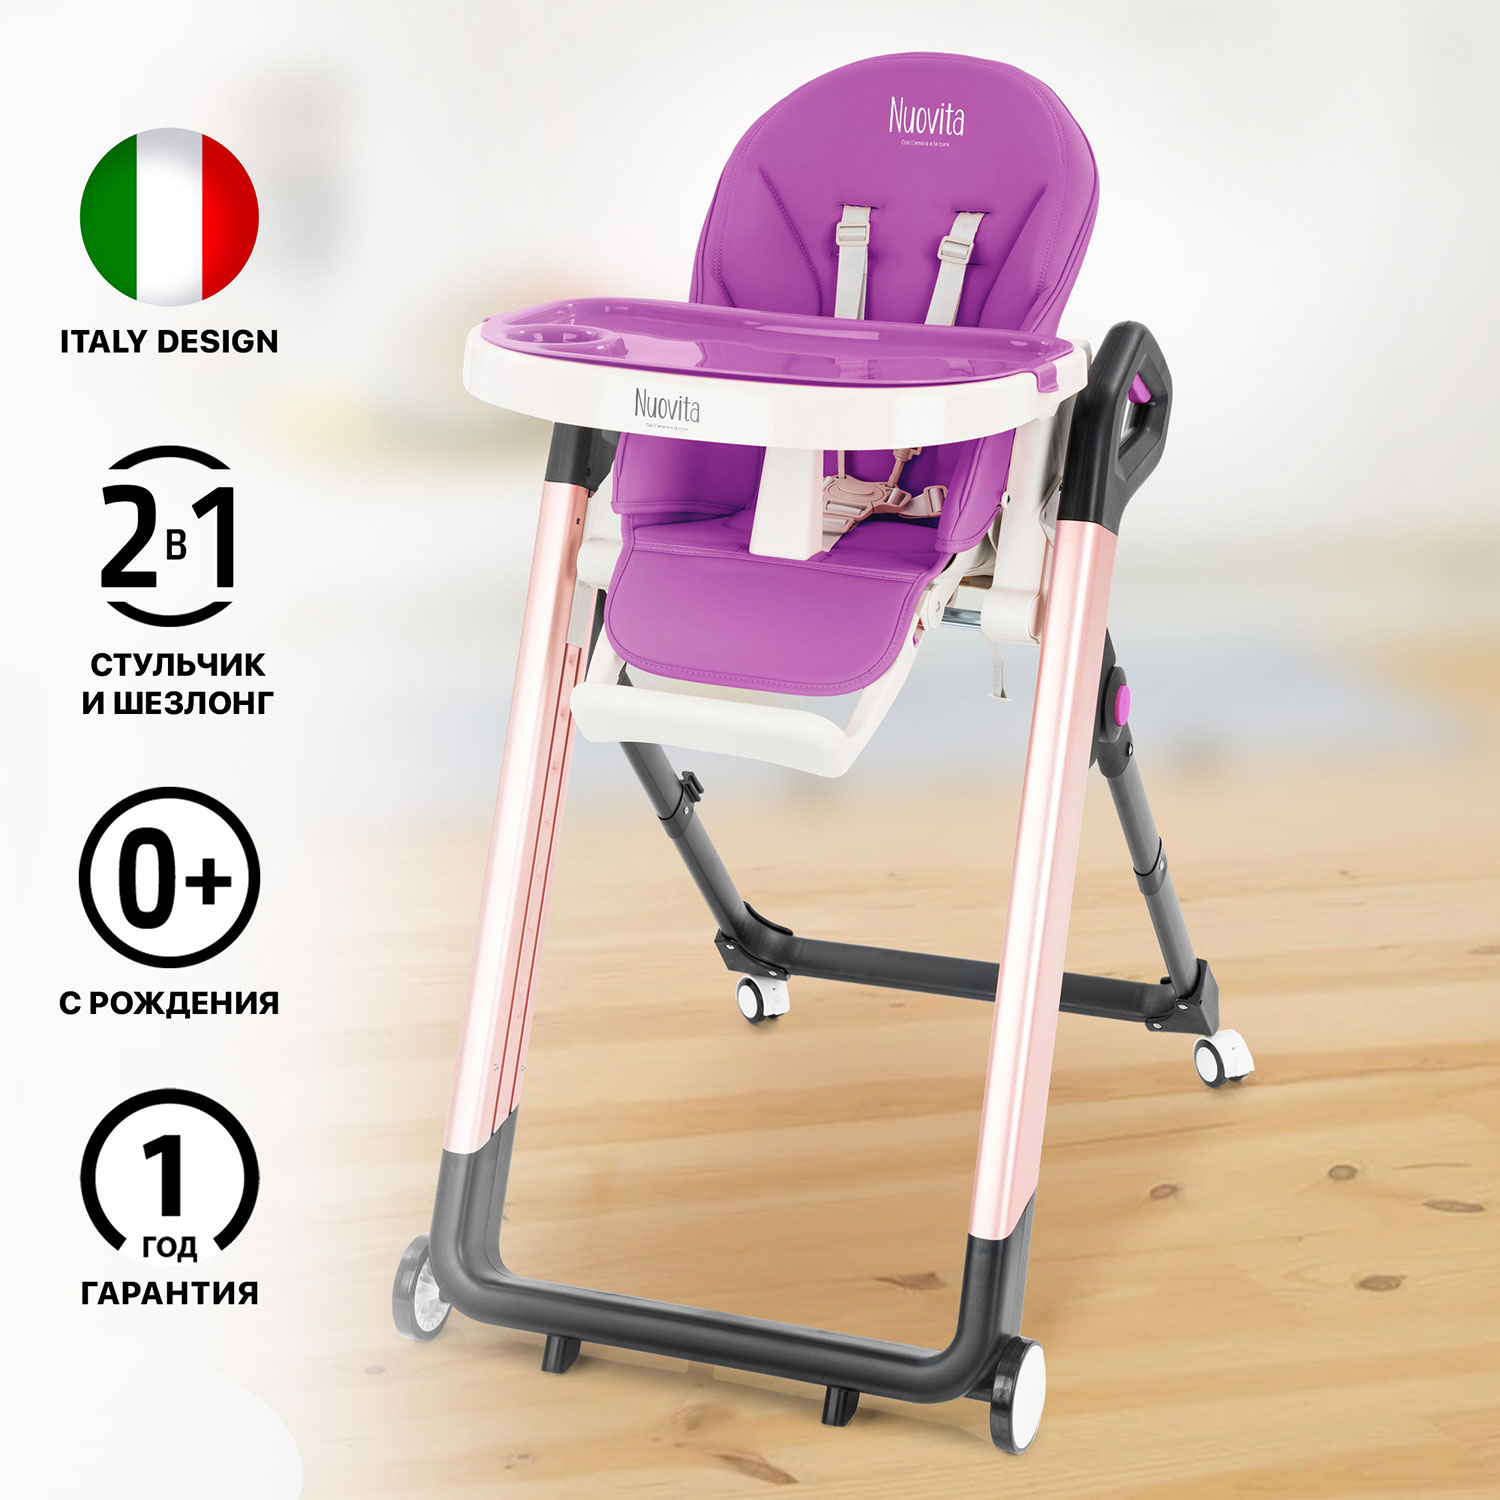 Стульчик для кормления Nuovita Orbita (Magenta, Rosa/Пурпурный, Розовый) стульчик для кормления nuovita grande magenta пурпурный